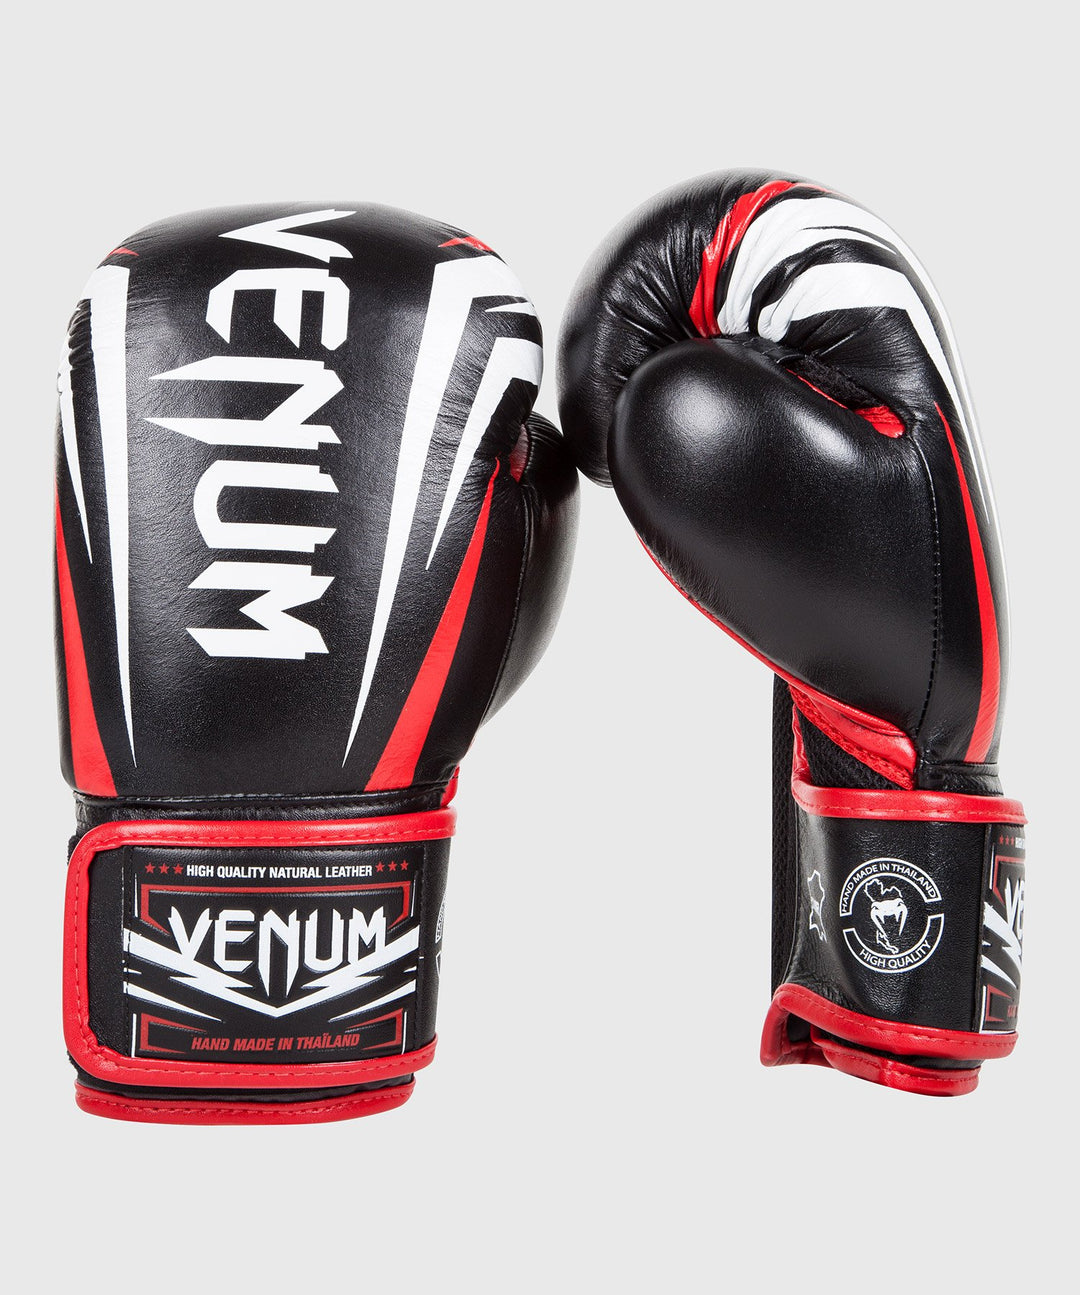 Venum Sharp Boxing Gloves